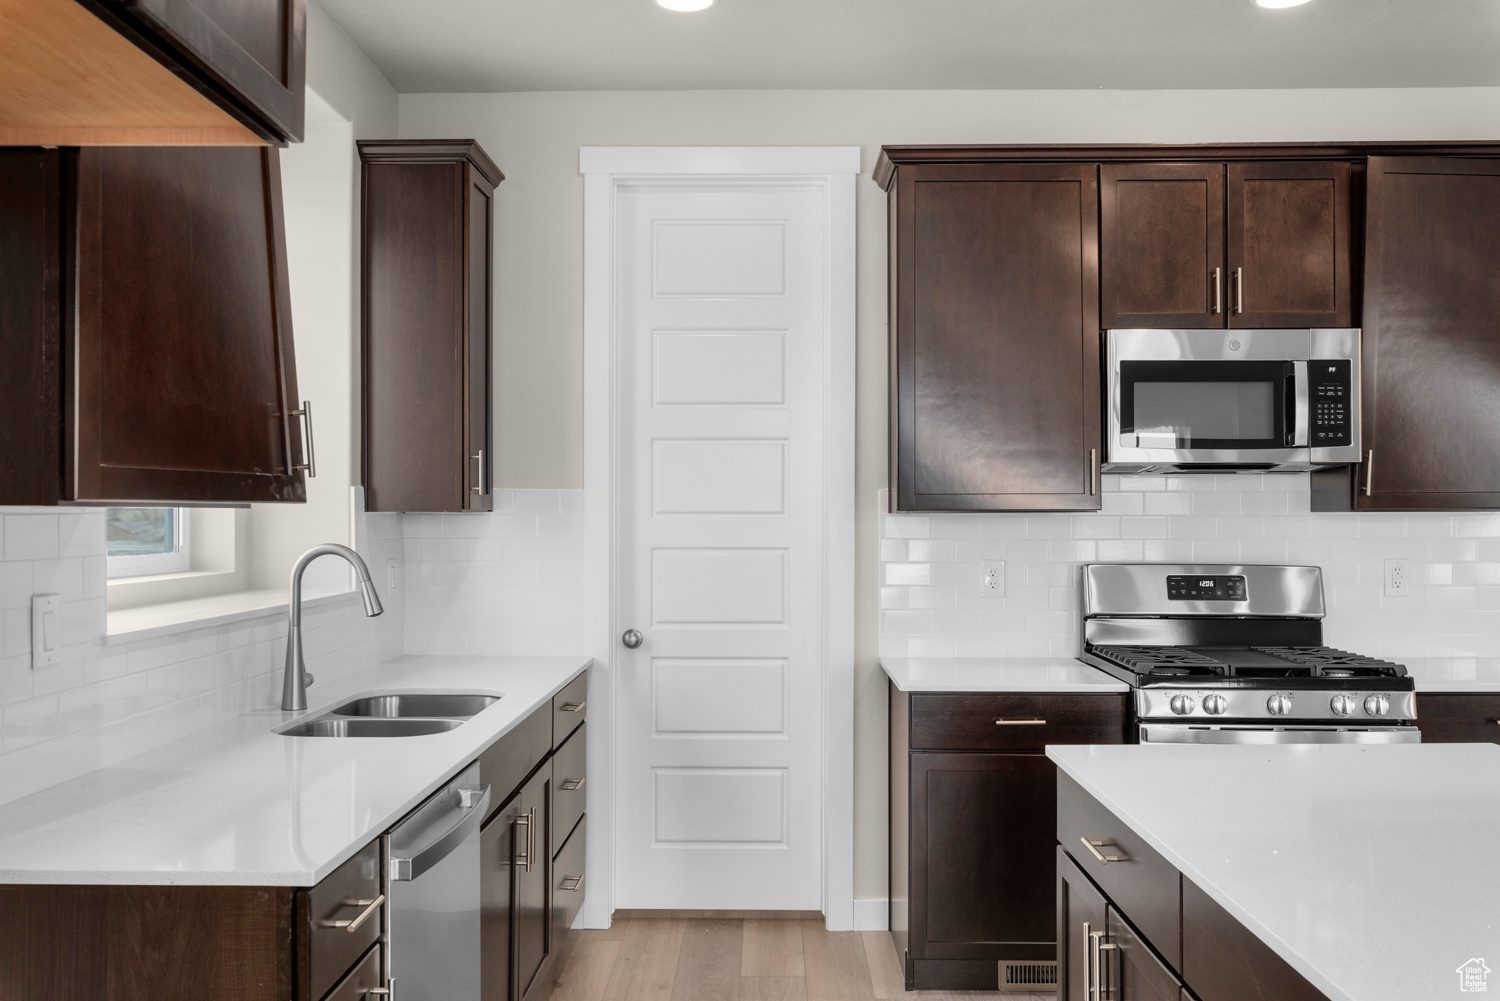 Kitchen with light hardwood / wood-style floors, stainless steel appliances, dark brown cabinets, tasteful backsplash, and sink